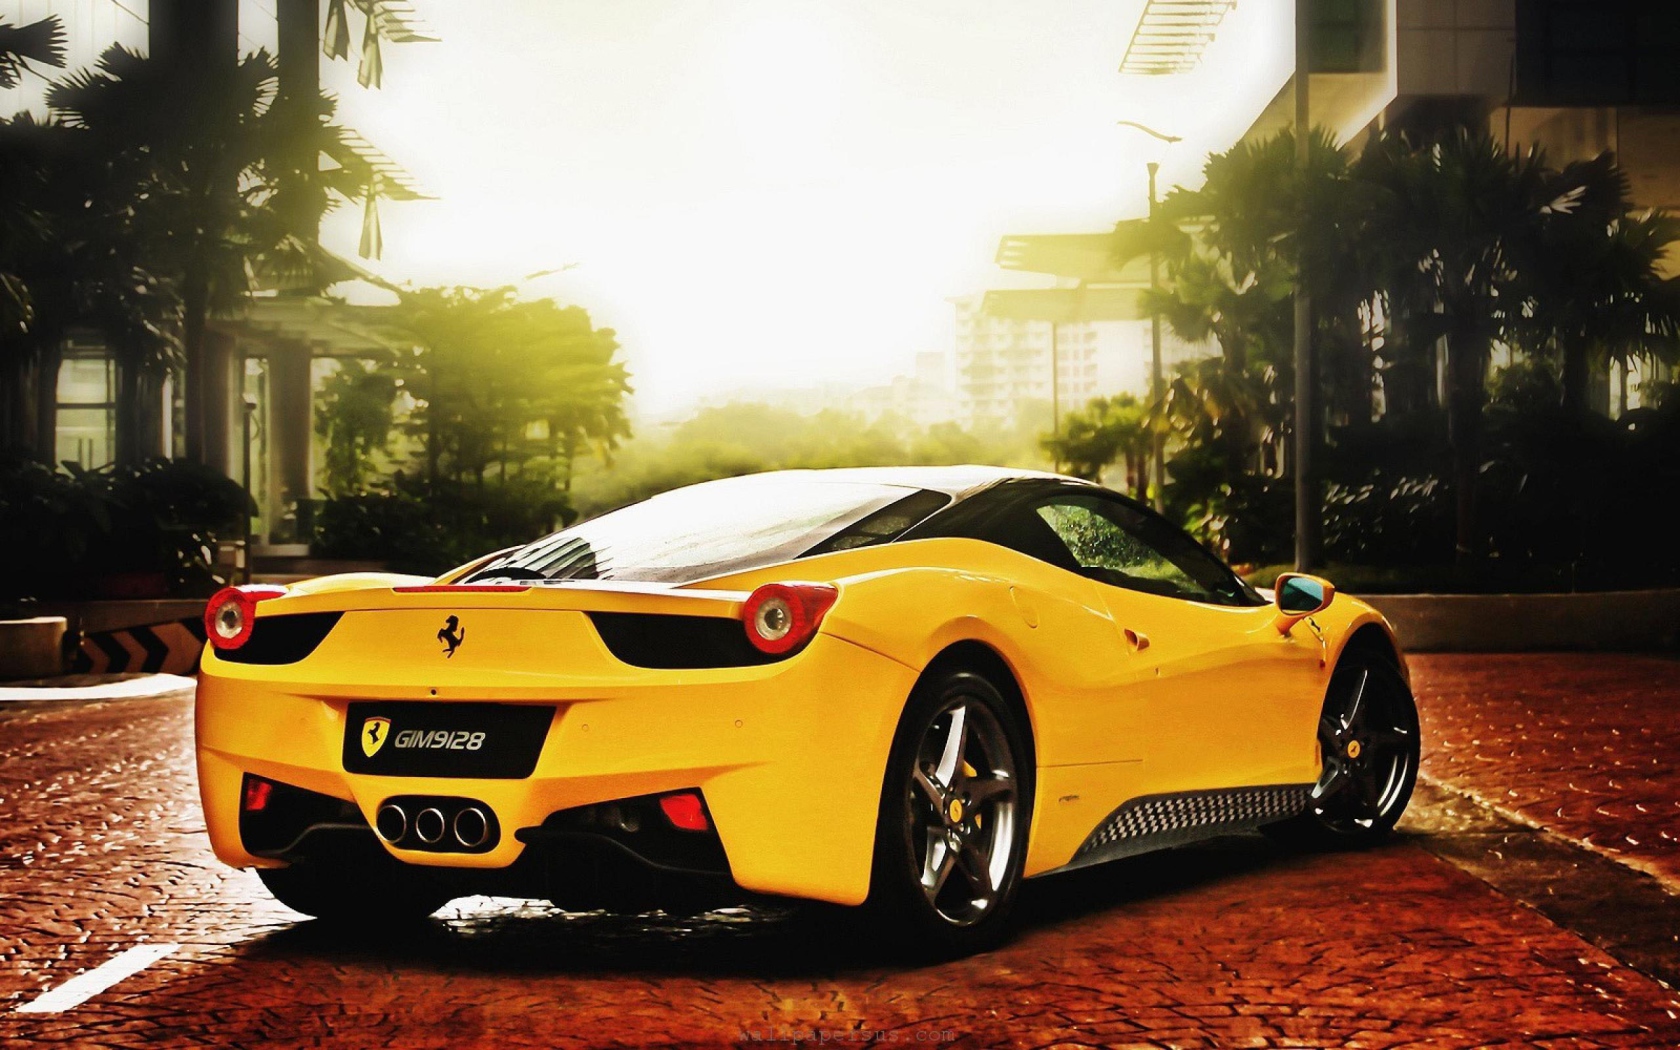 Желтый Ferrari 458 на брусчатке улицы